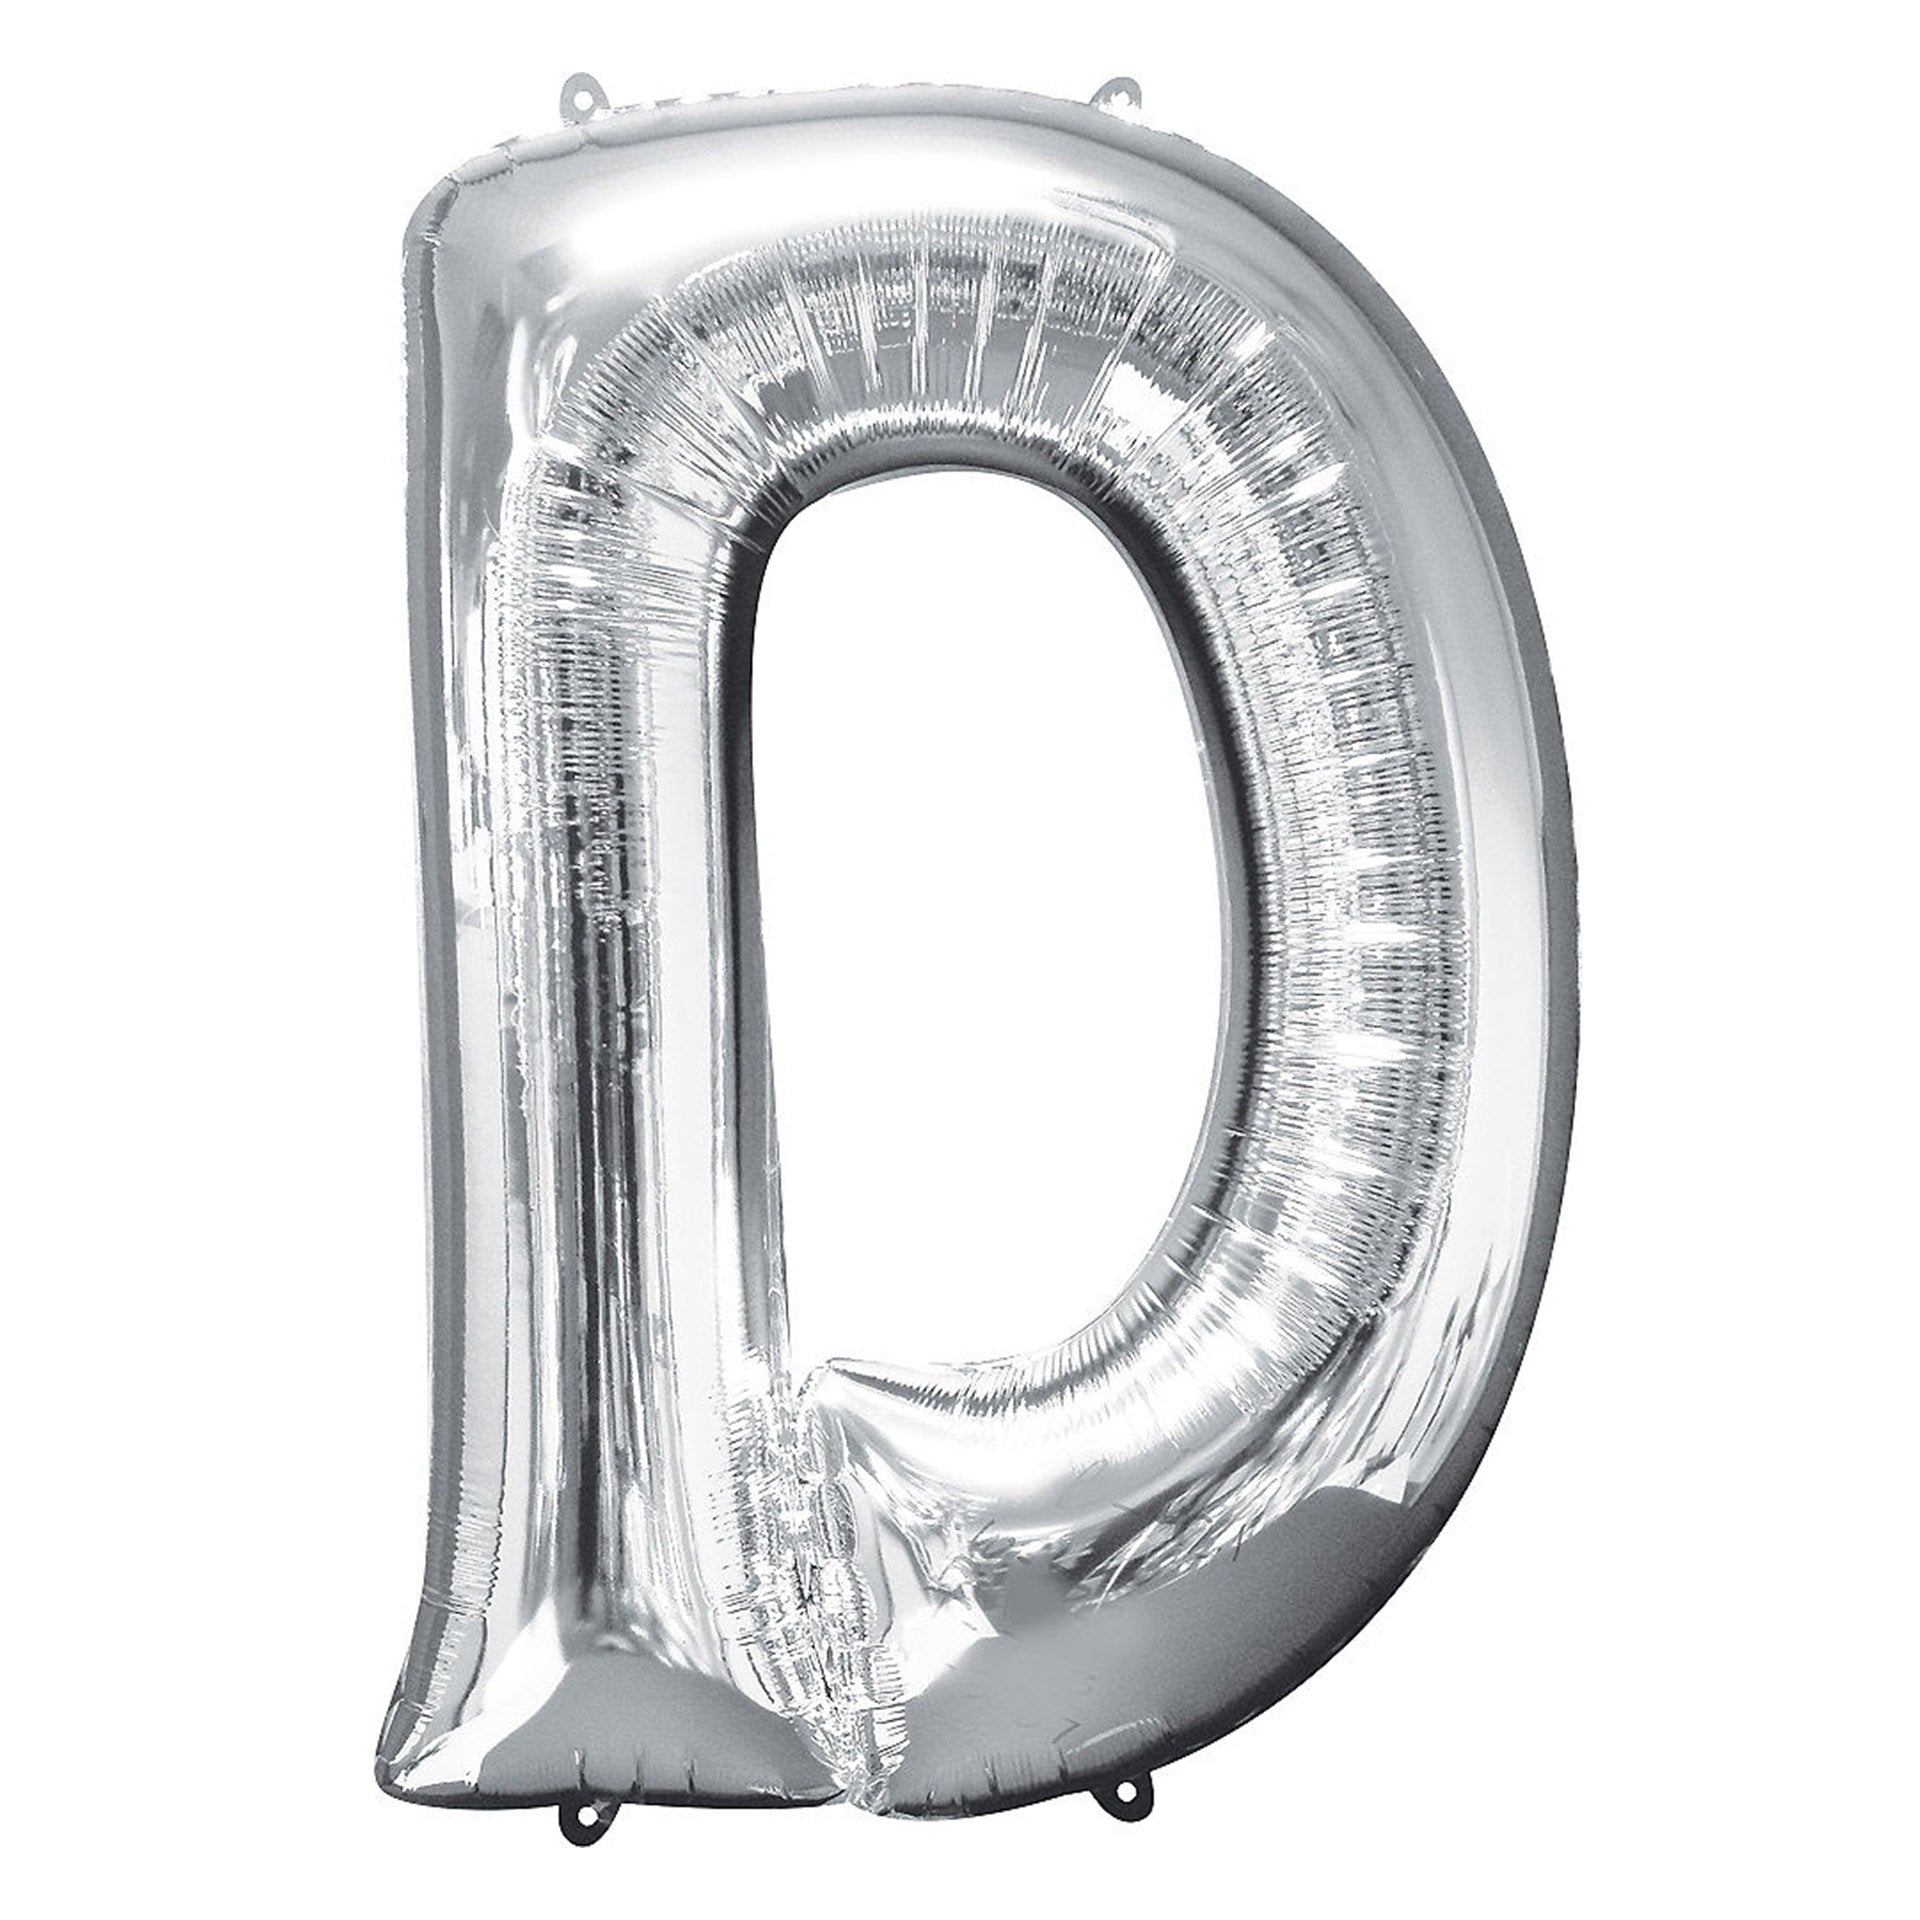 Letter D silver foil balloon for sale online in Dubai